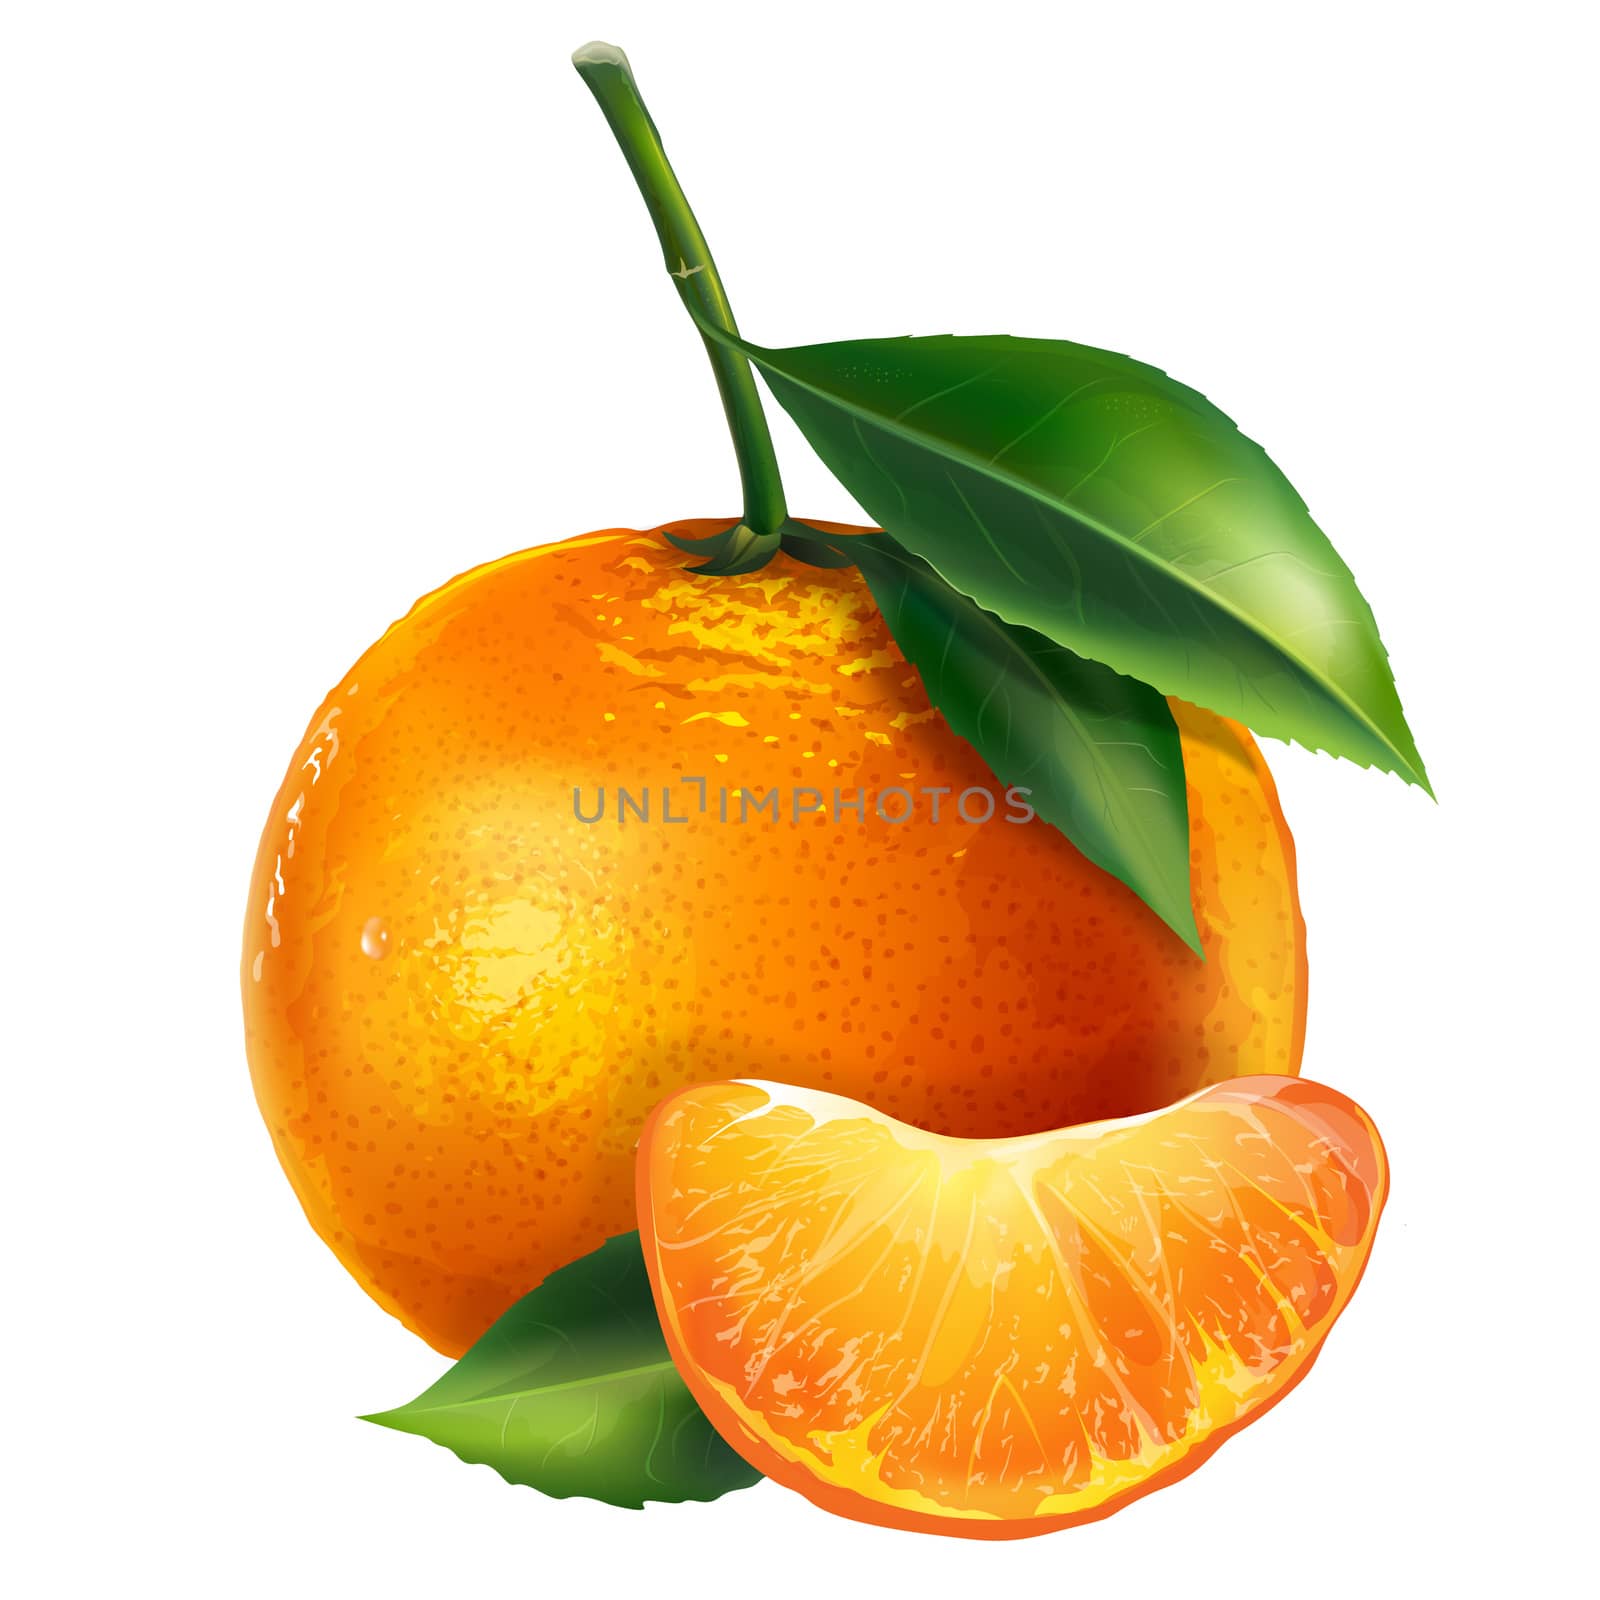 Mandarin with leaves. Isolated illustration on white background.